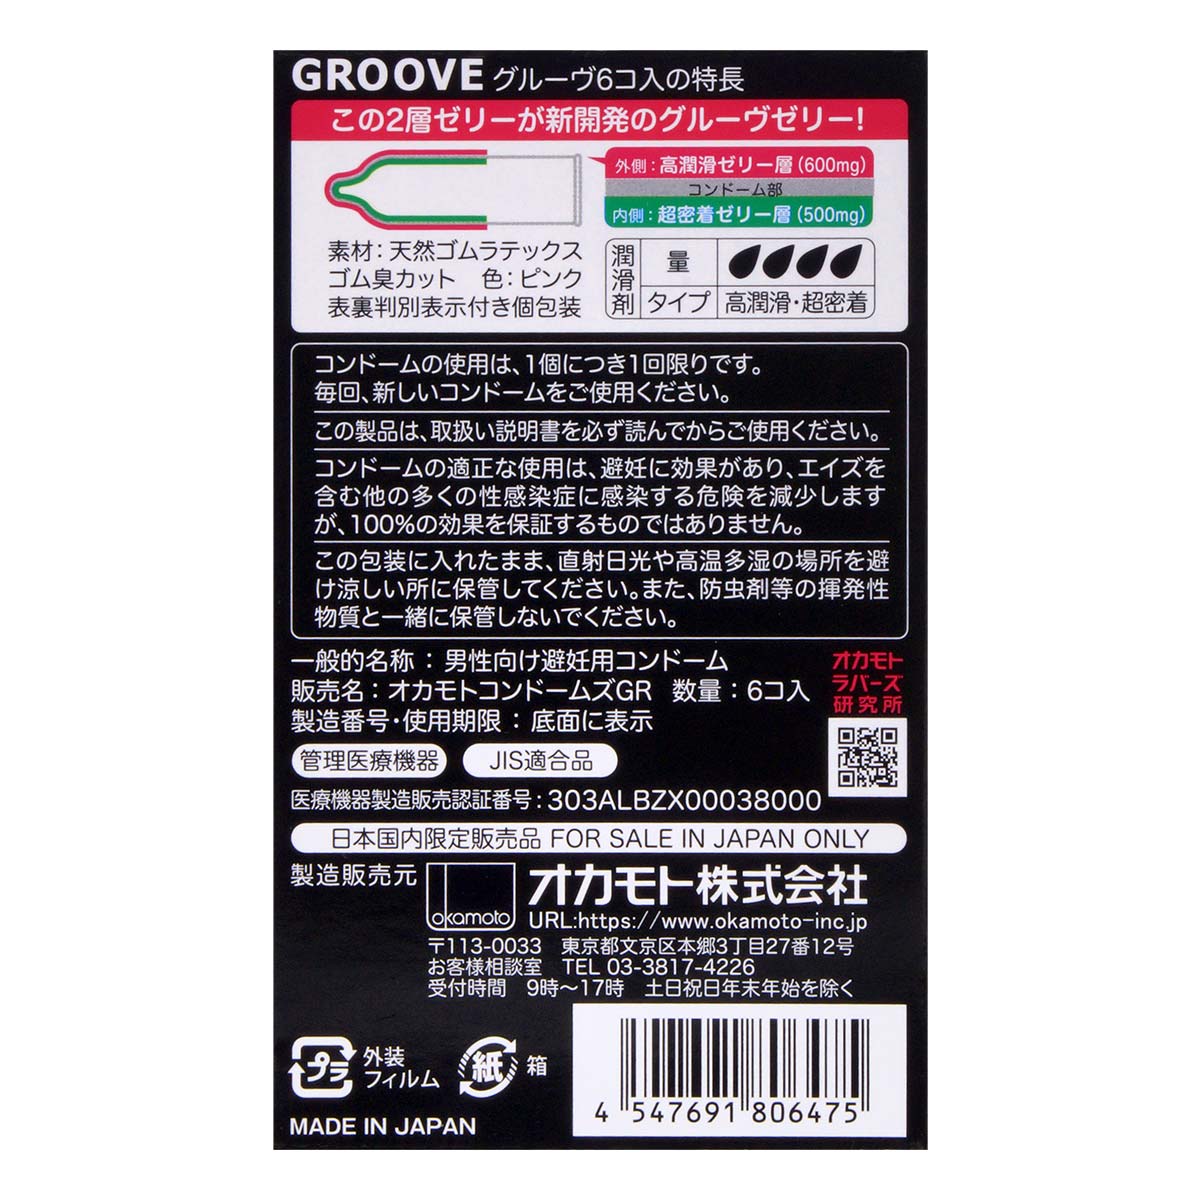 Okamoto GROOVE (Japan Edition) 6 pieces Latex Condom-p_3